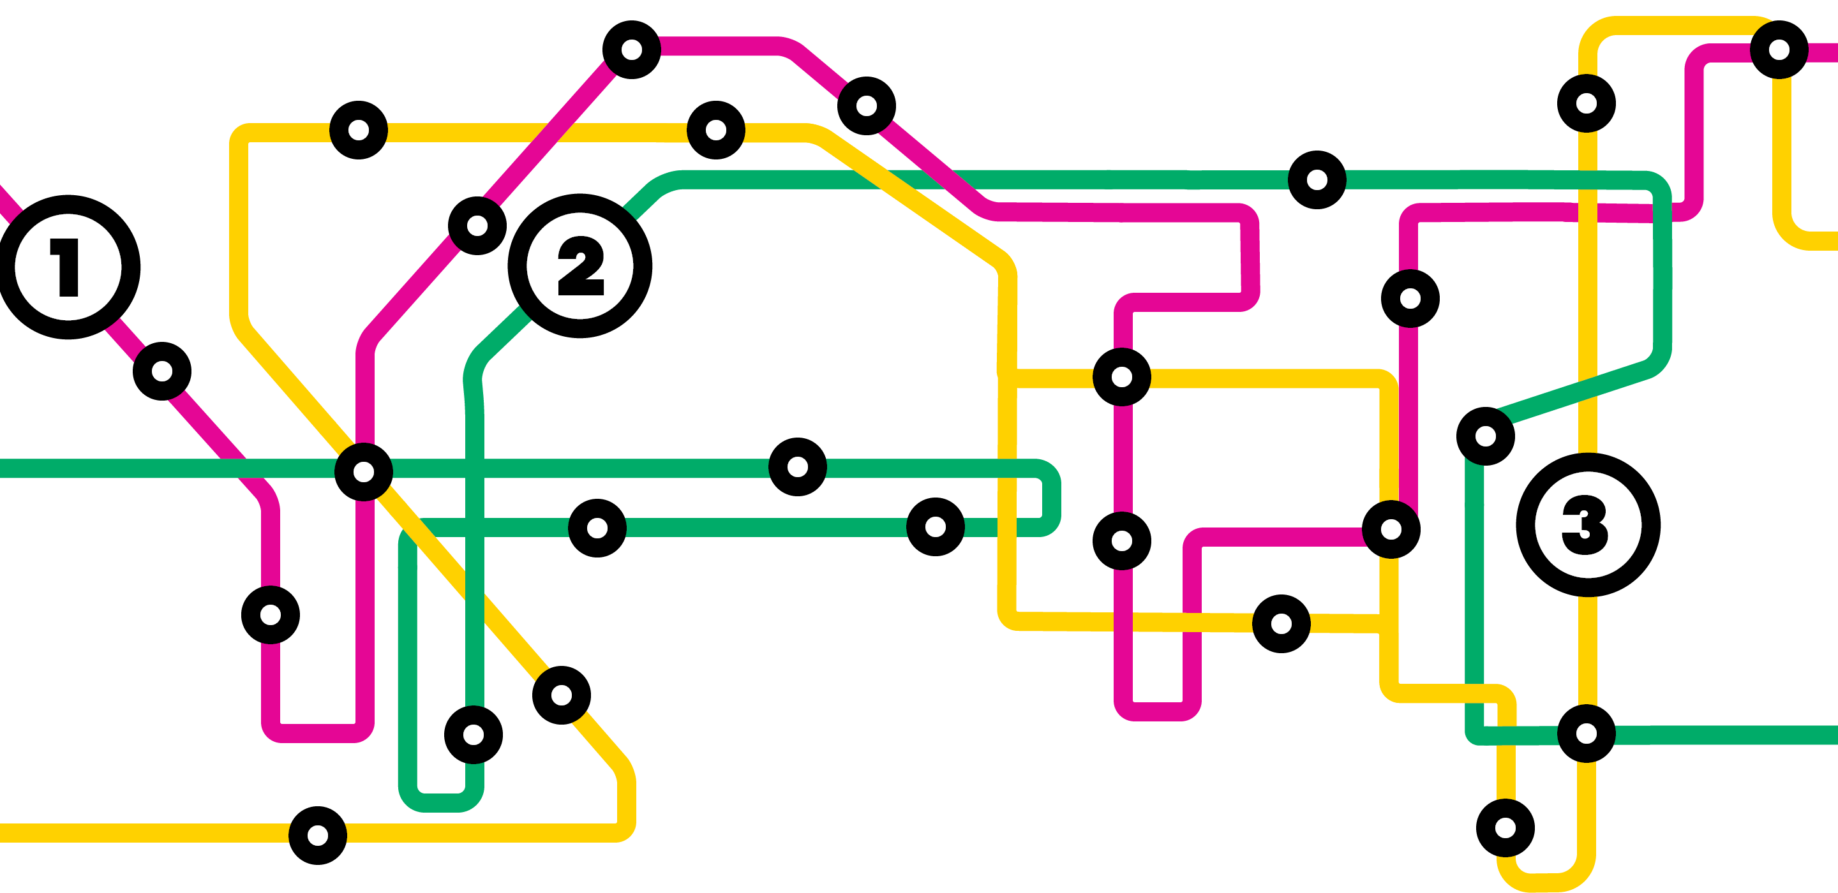 Colorful drawing that mimics transit map